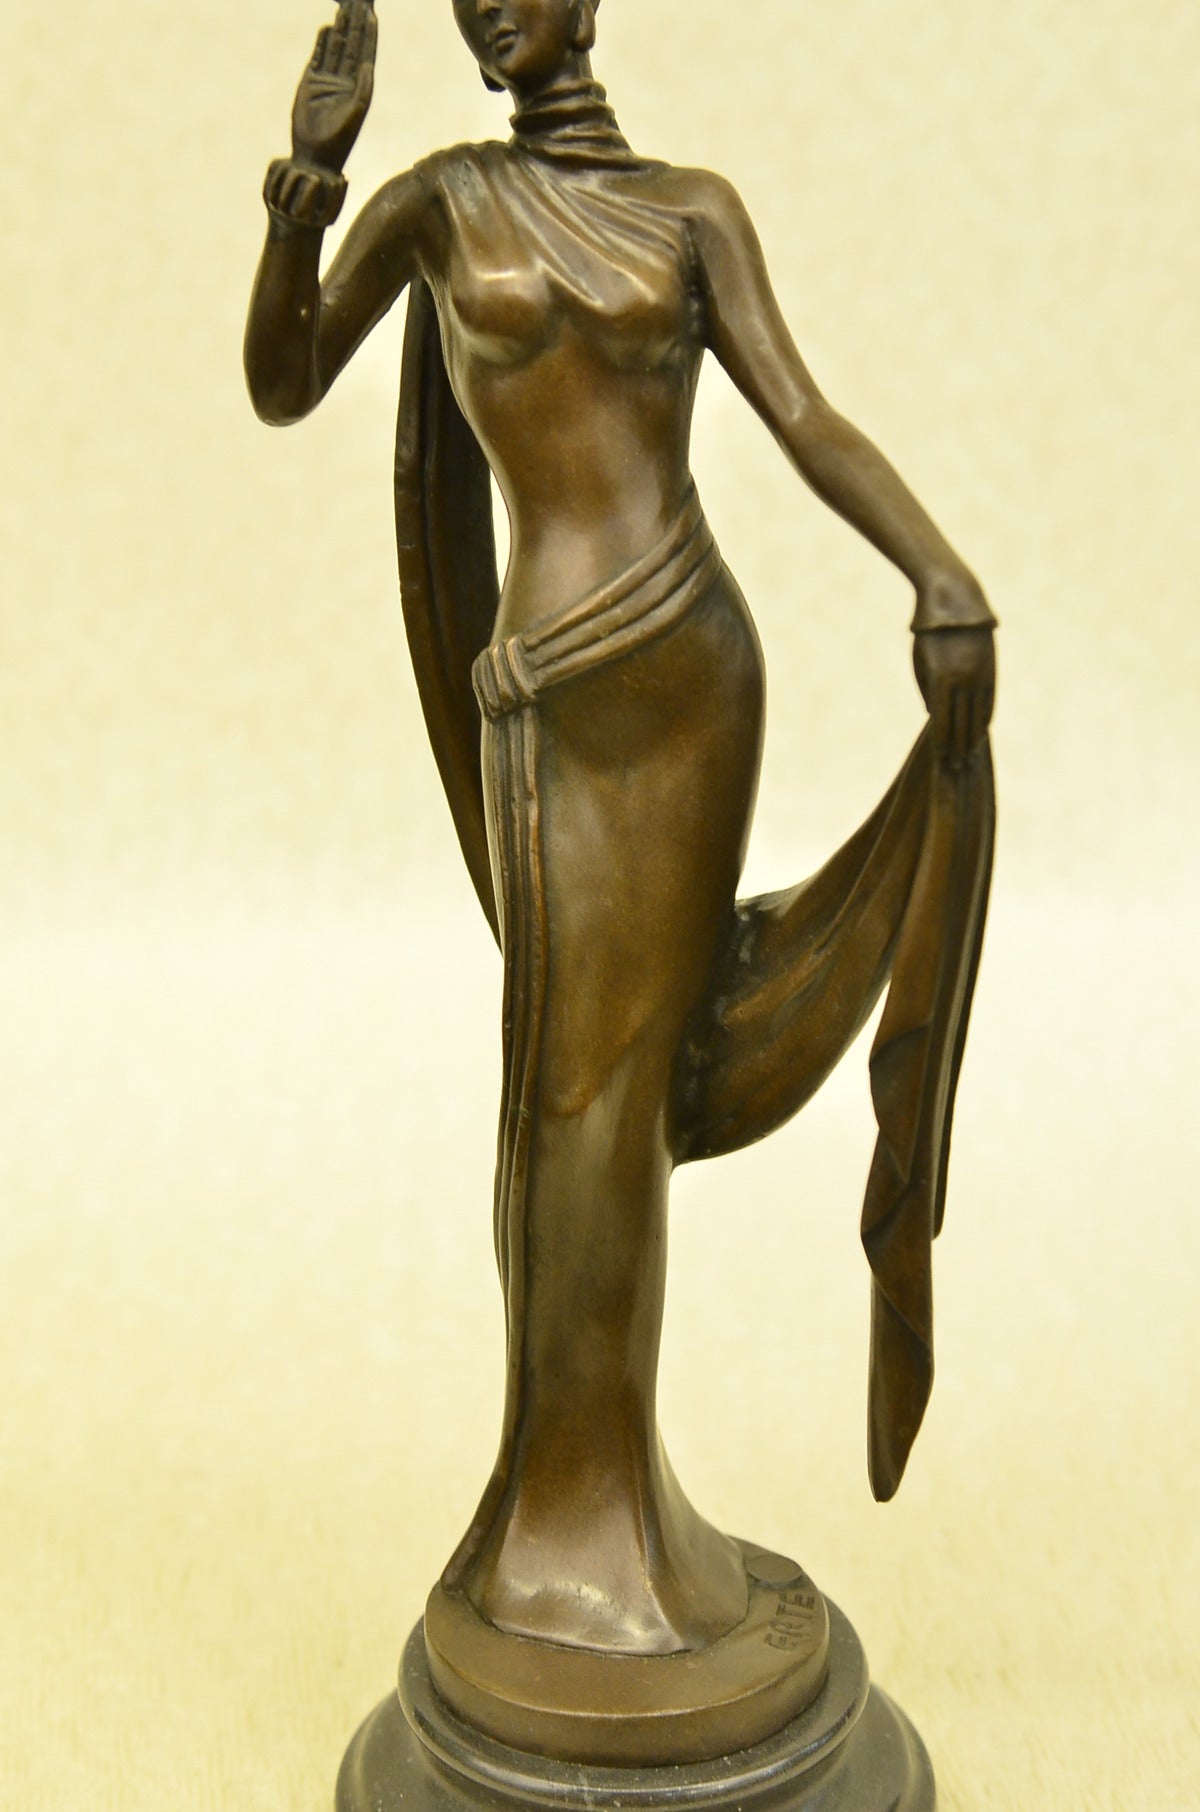 Handcrafted bronze sculpture SALE Decor Sensual Cast Hot Model 1920 Nouveau Art